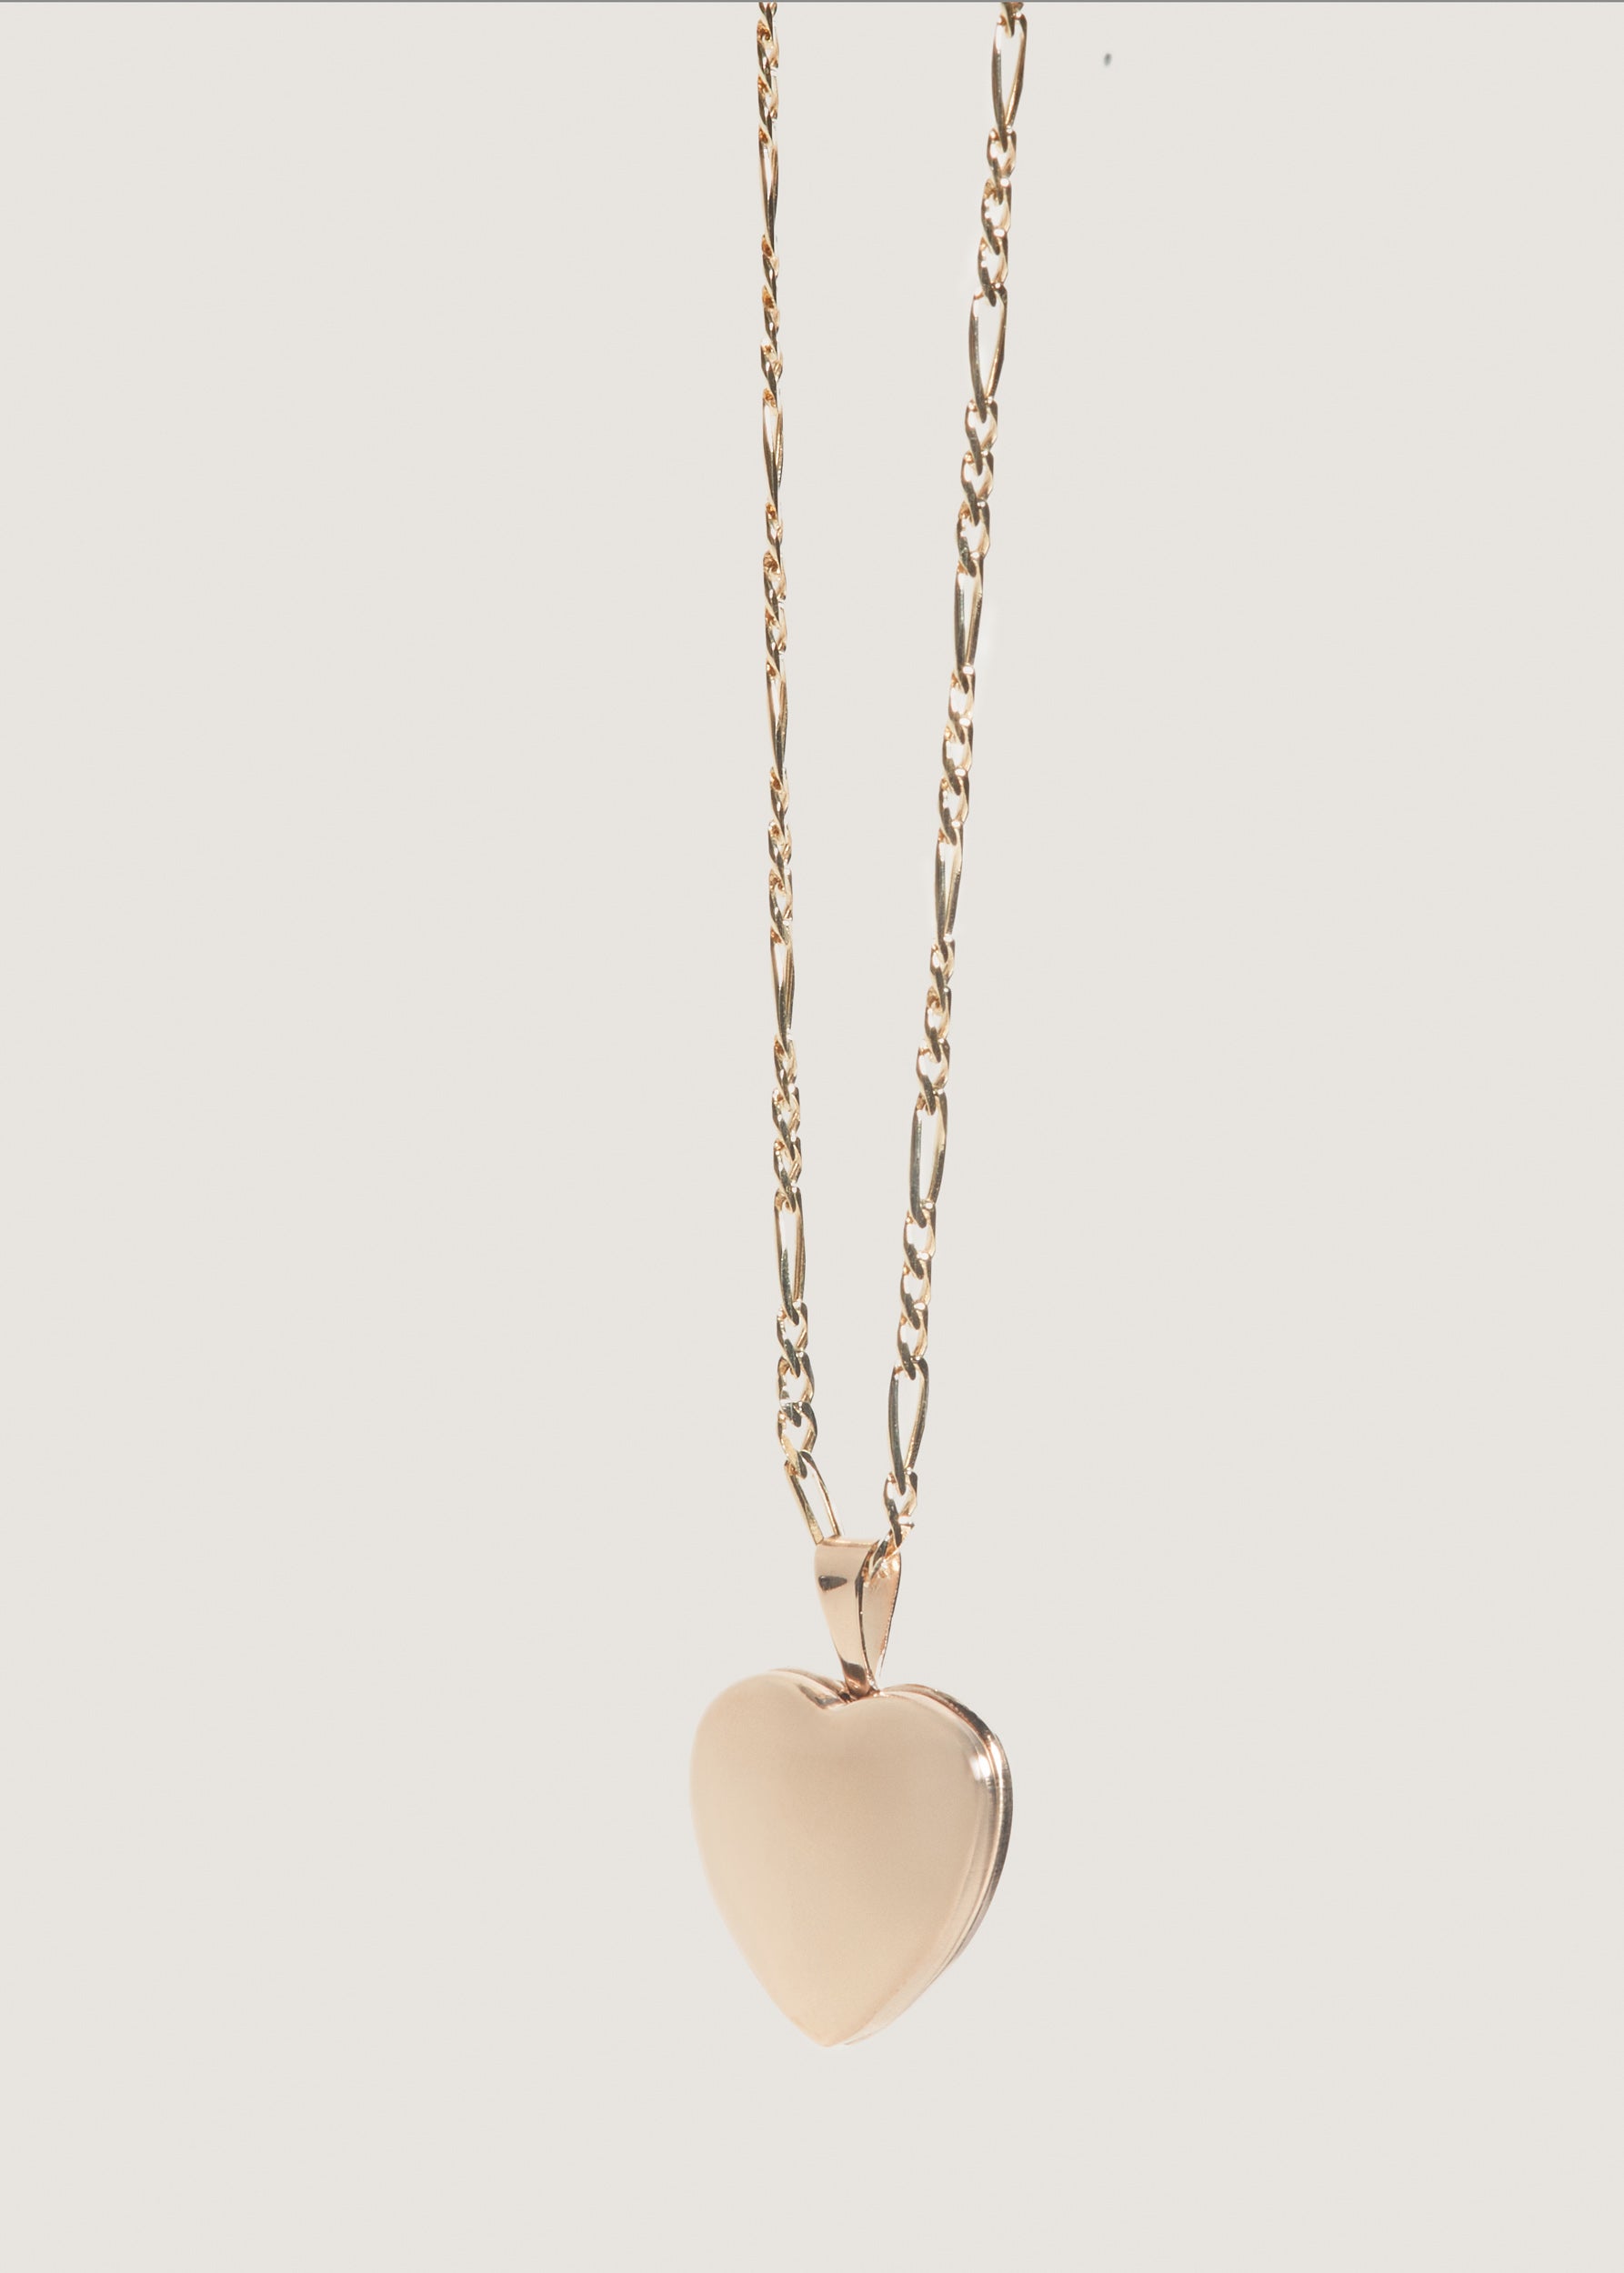 alt="Maison Heart Locket I with kyle figaro chain"